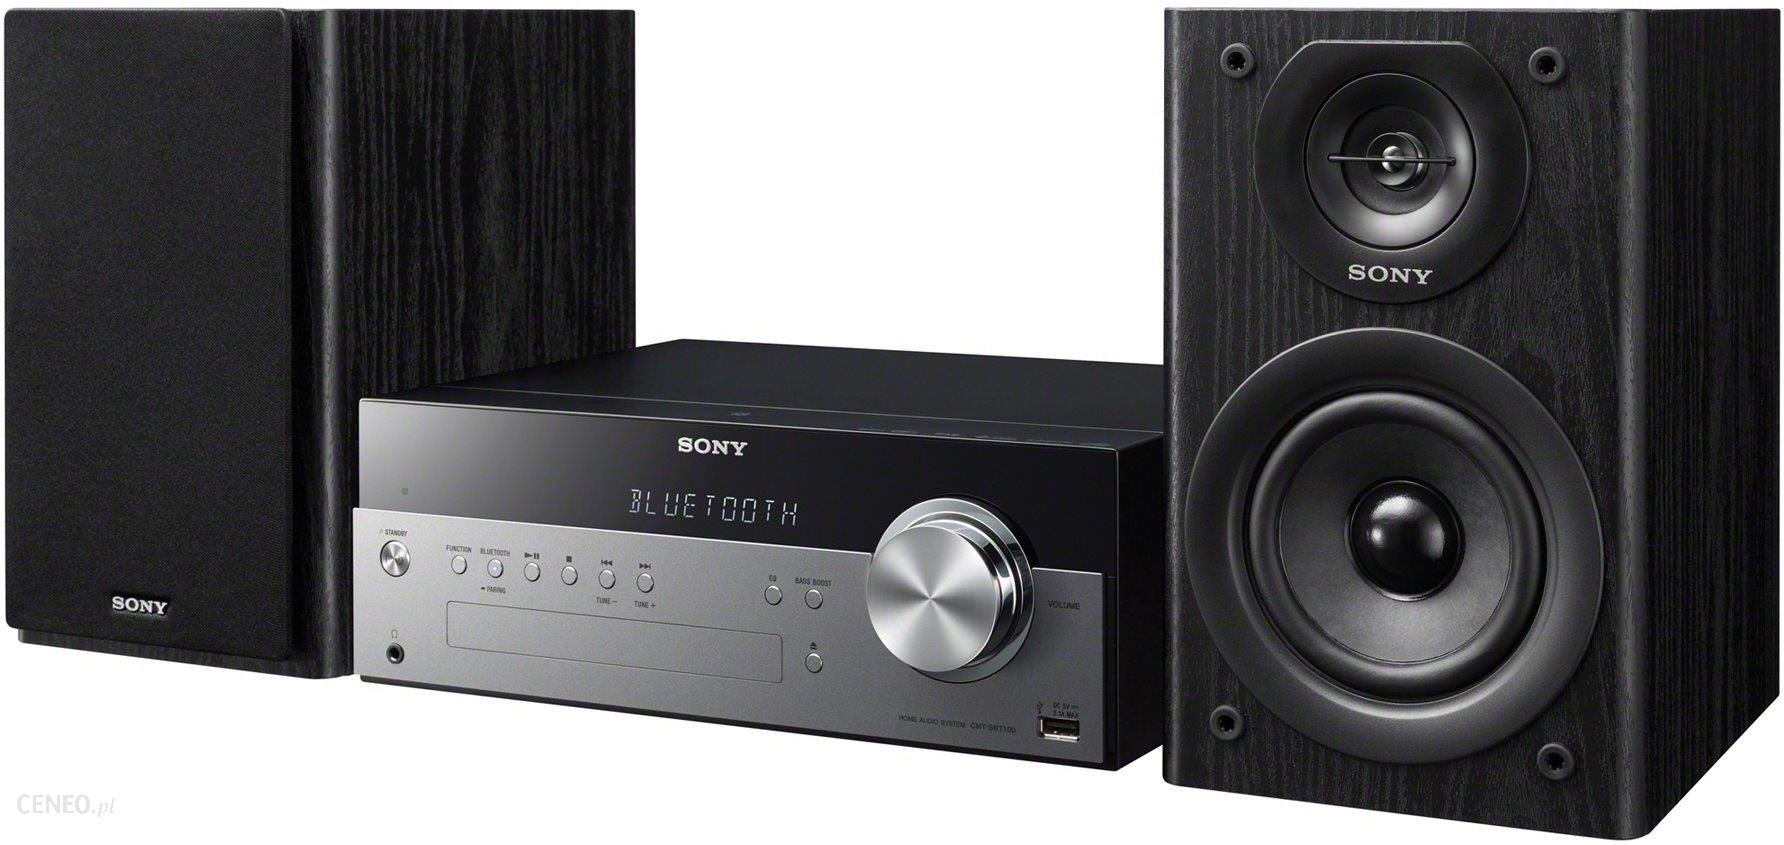  Sony CMT-SBT100 czarny